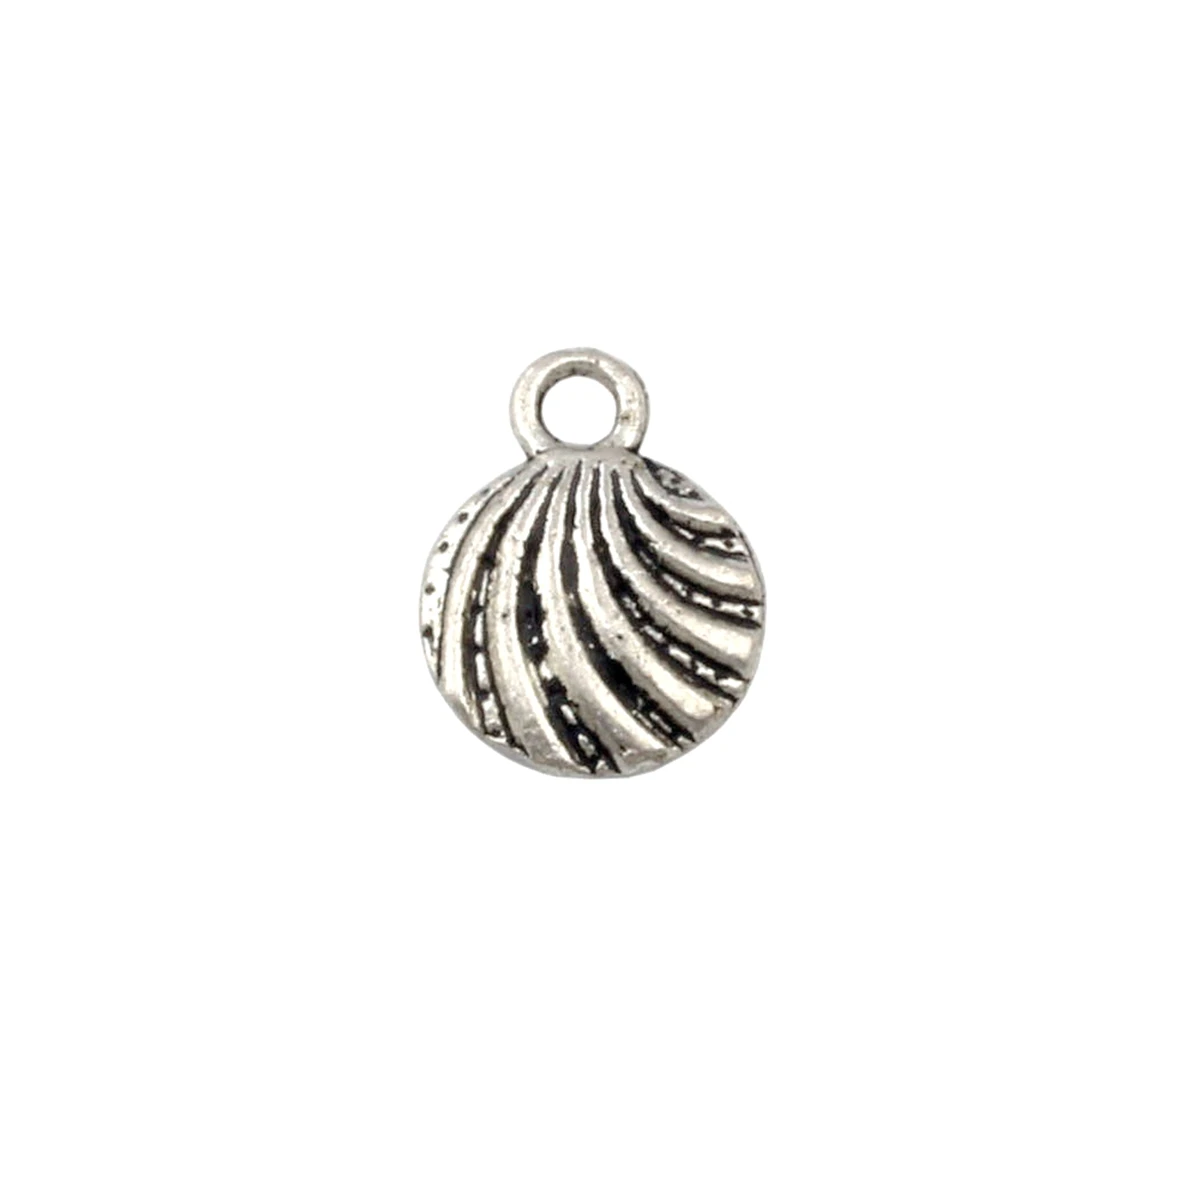 5x Tibetan Silver Tone Sea Shell Charms Pendants DIY Jewellery Necklace Making 